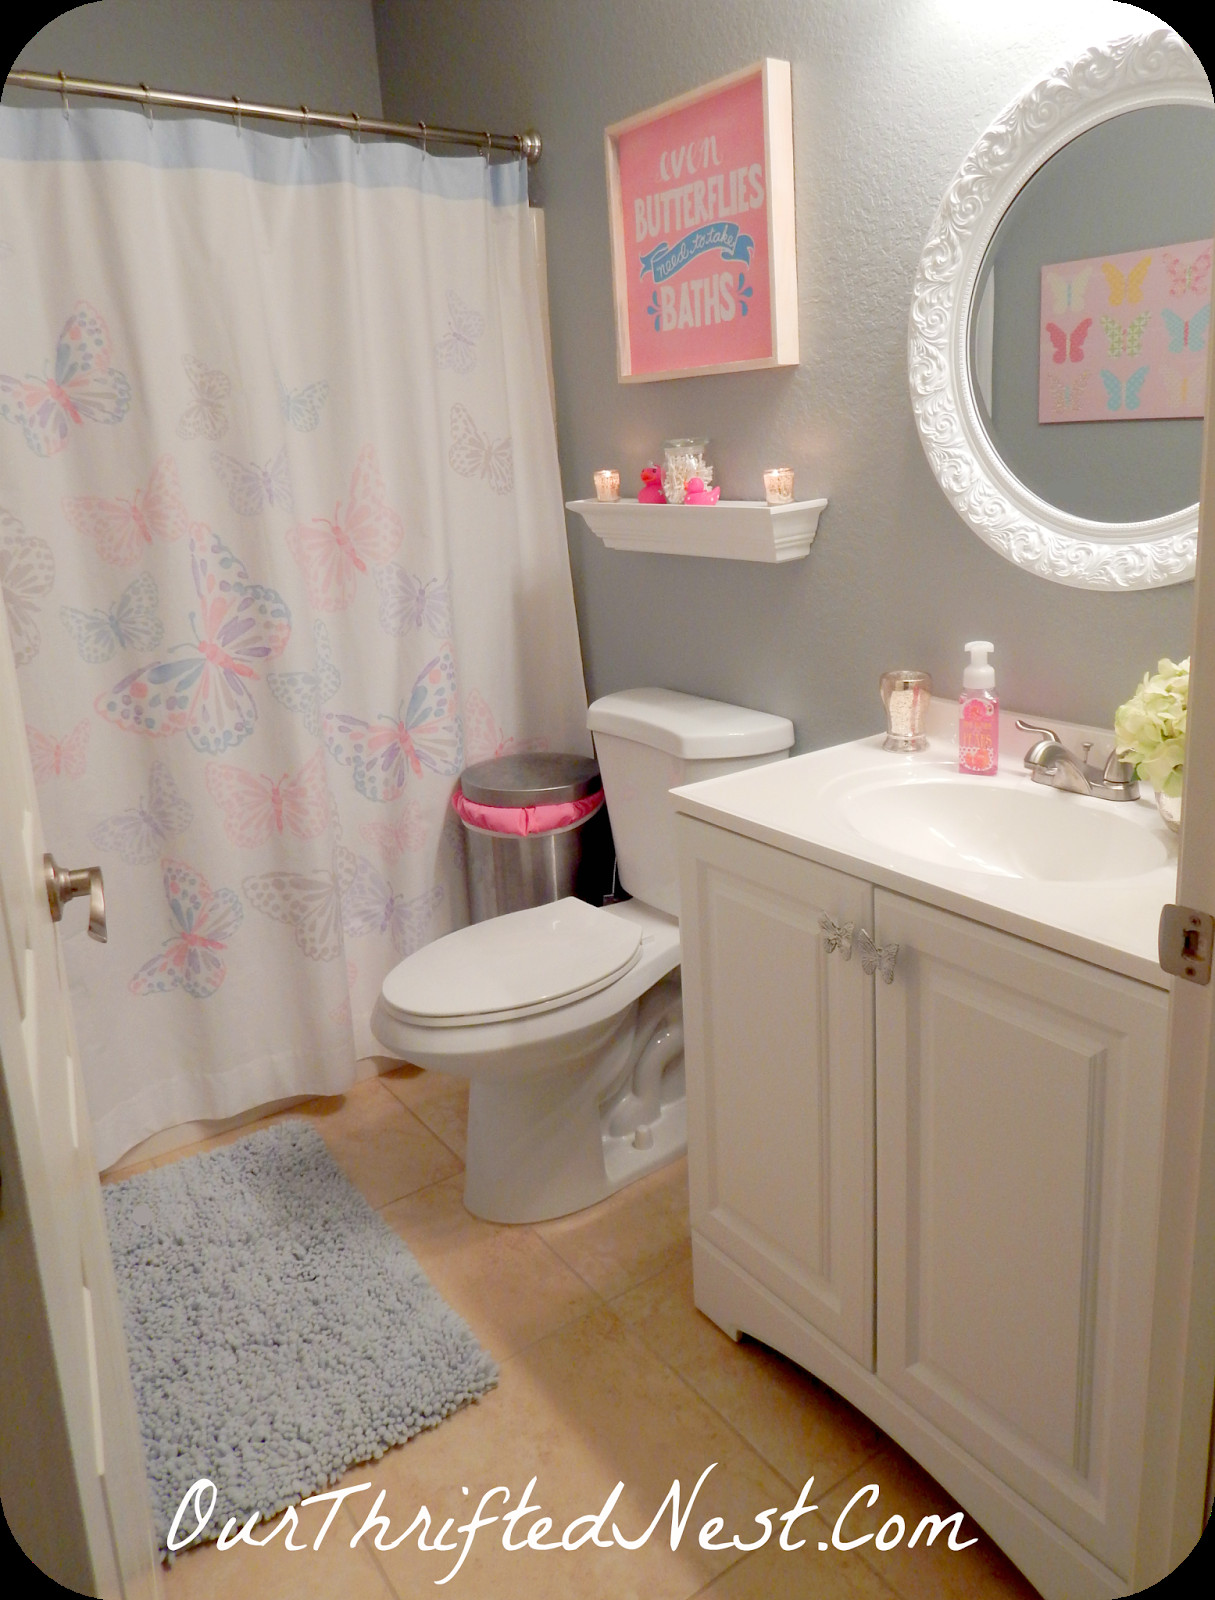 Girls Bathroom Decor
 Bathroom Decor Small Little s Girl s Butterfly Pink Gray